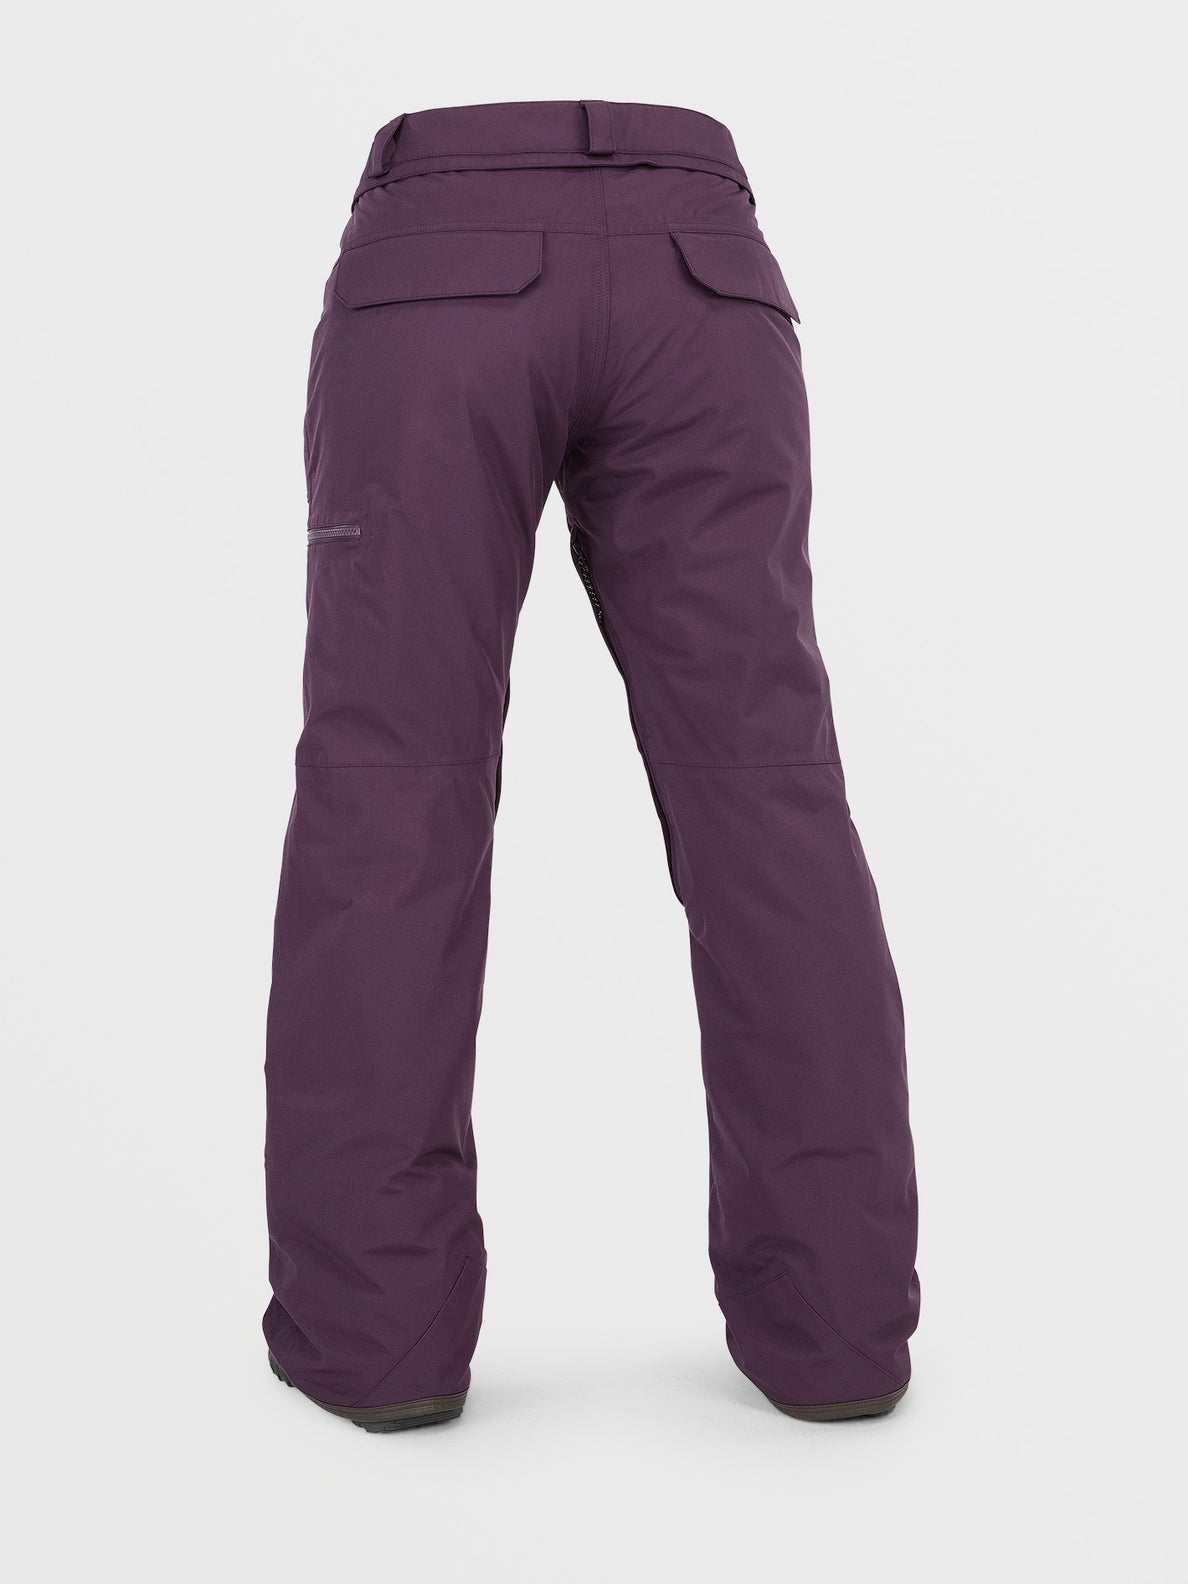 Faded Glory Jeans Pants Womens Plus Size 26W Blackberry Stain Capri Cotton  Blend | eBay